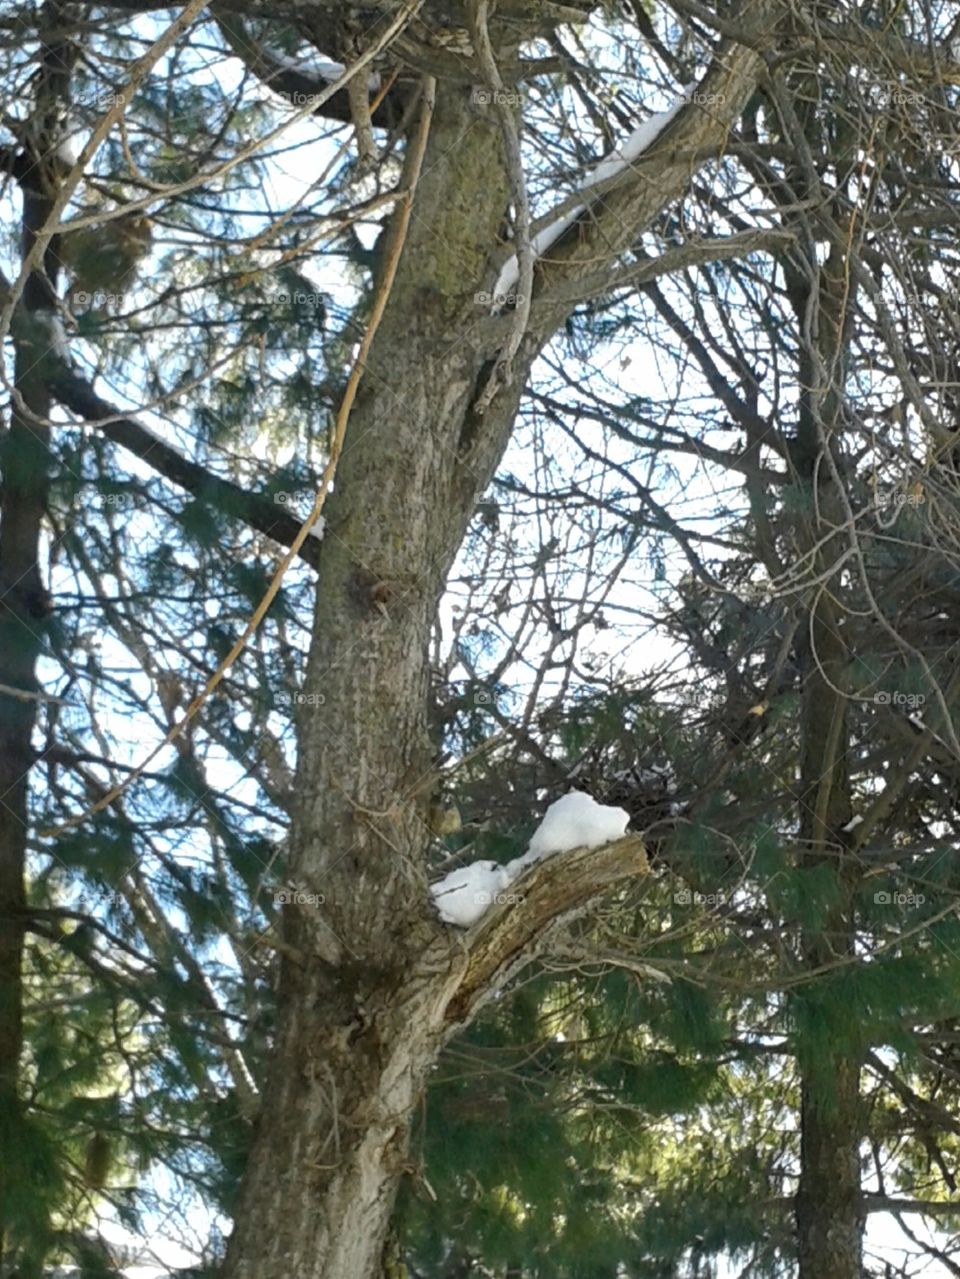 snowtree